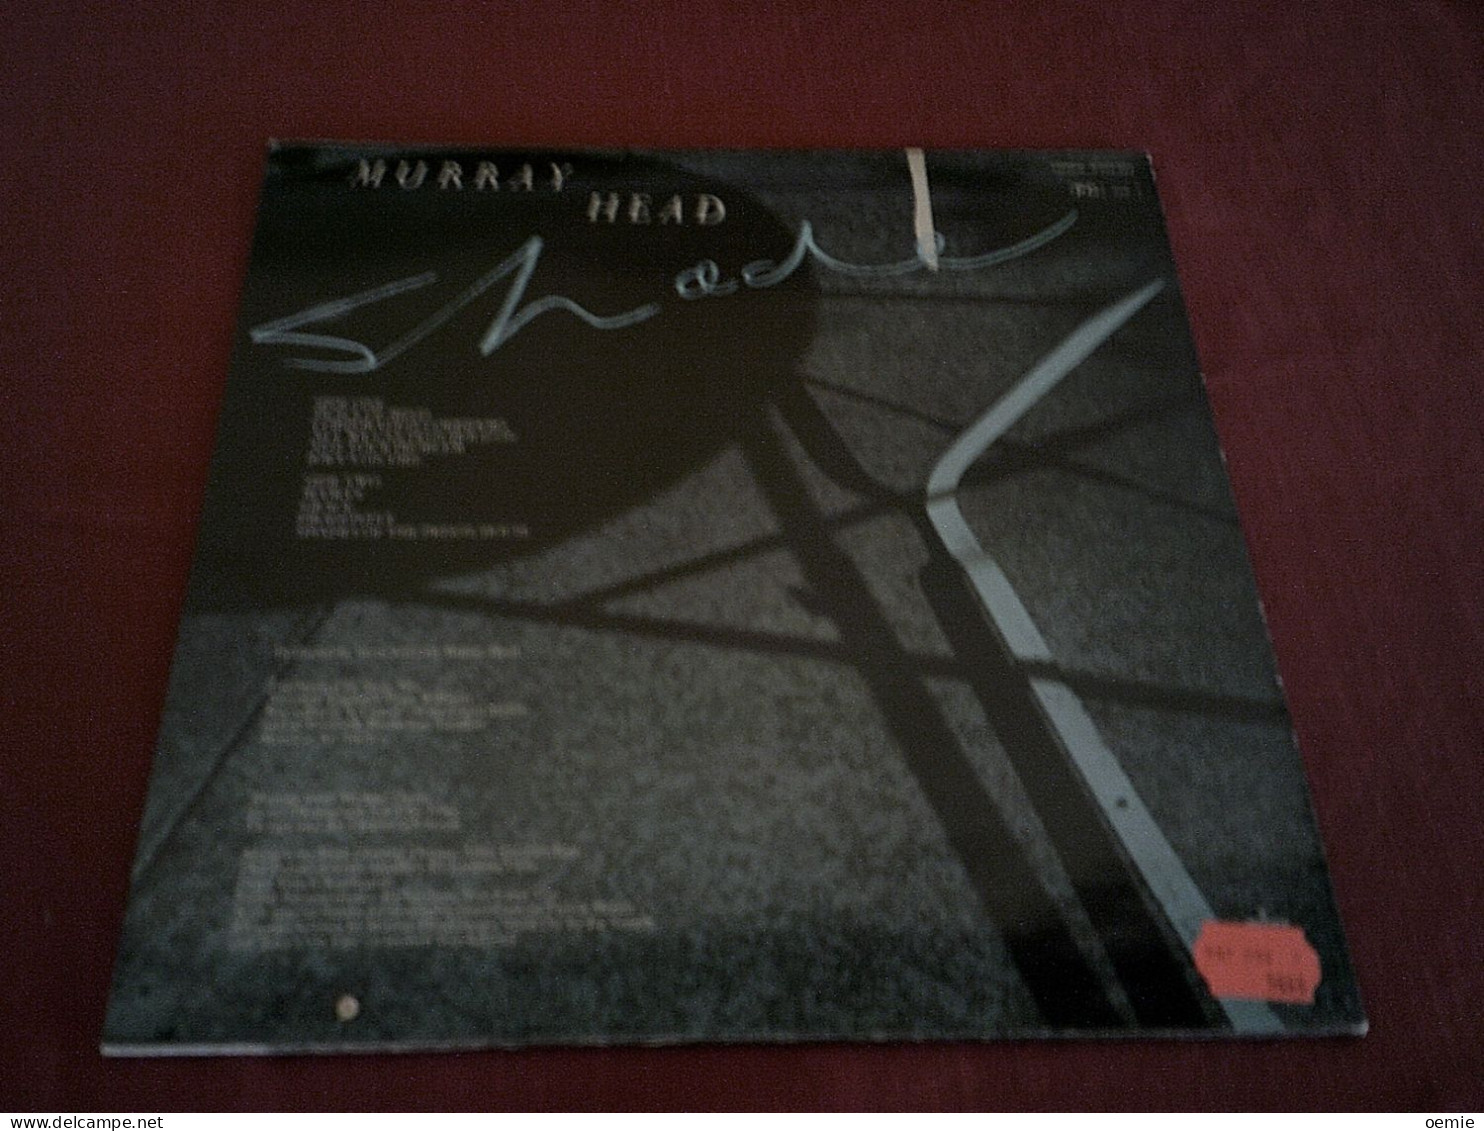 MURRAY  HEAD  °° SHADE - Other - English Music